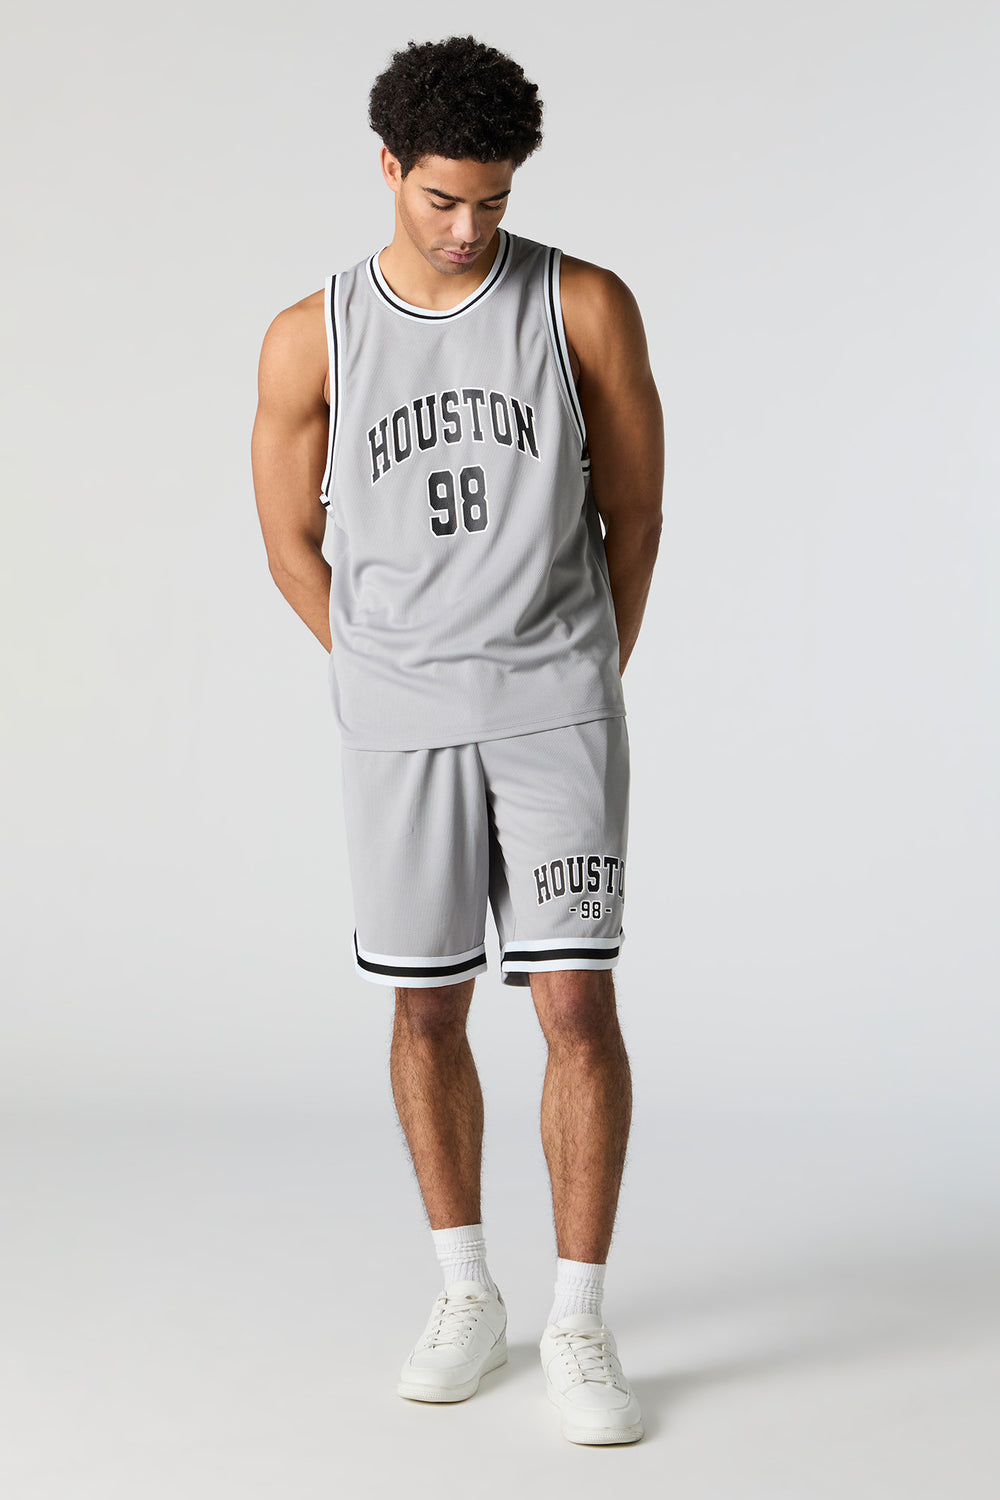 Houston Graphic Mesh Basketball Jersey Houston Graphic Mesh Basketball Jersey 3